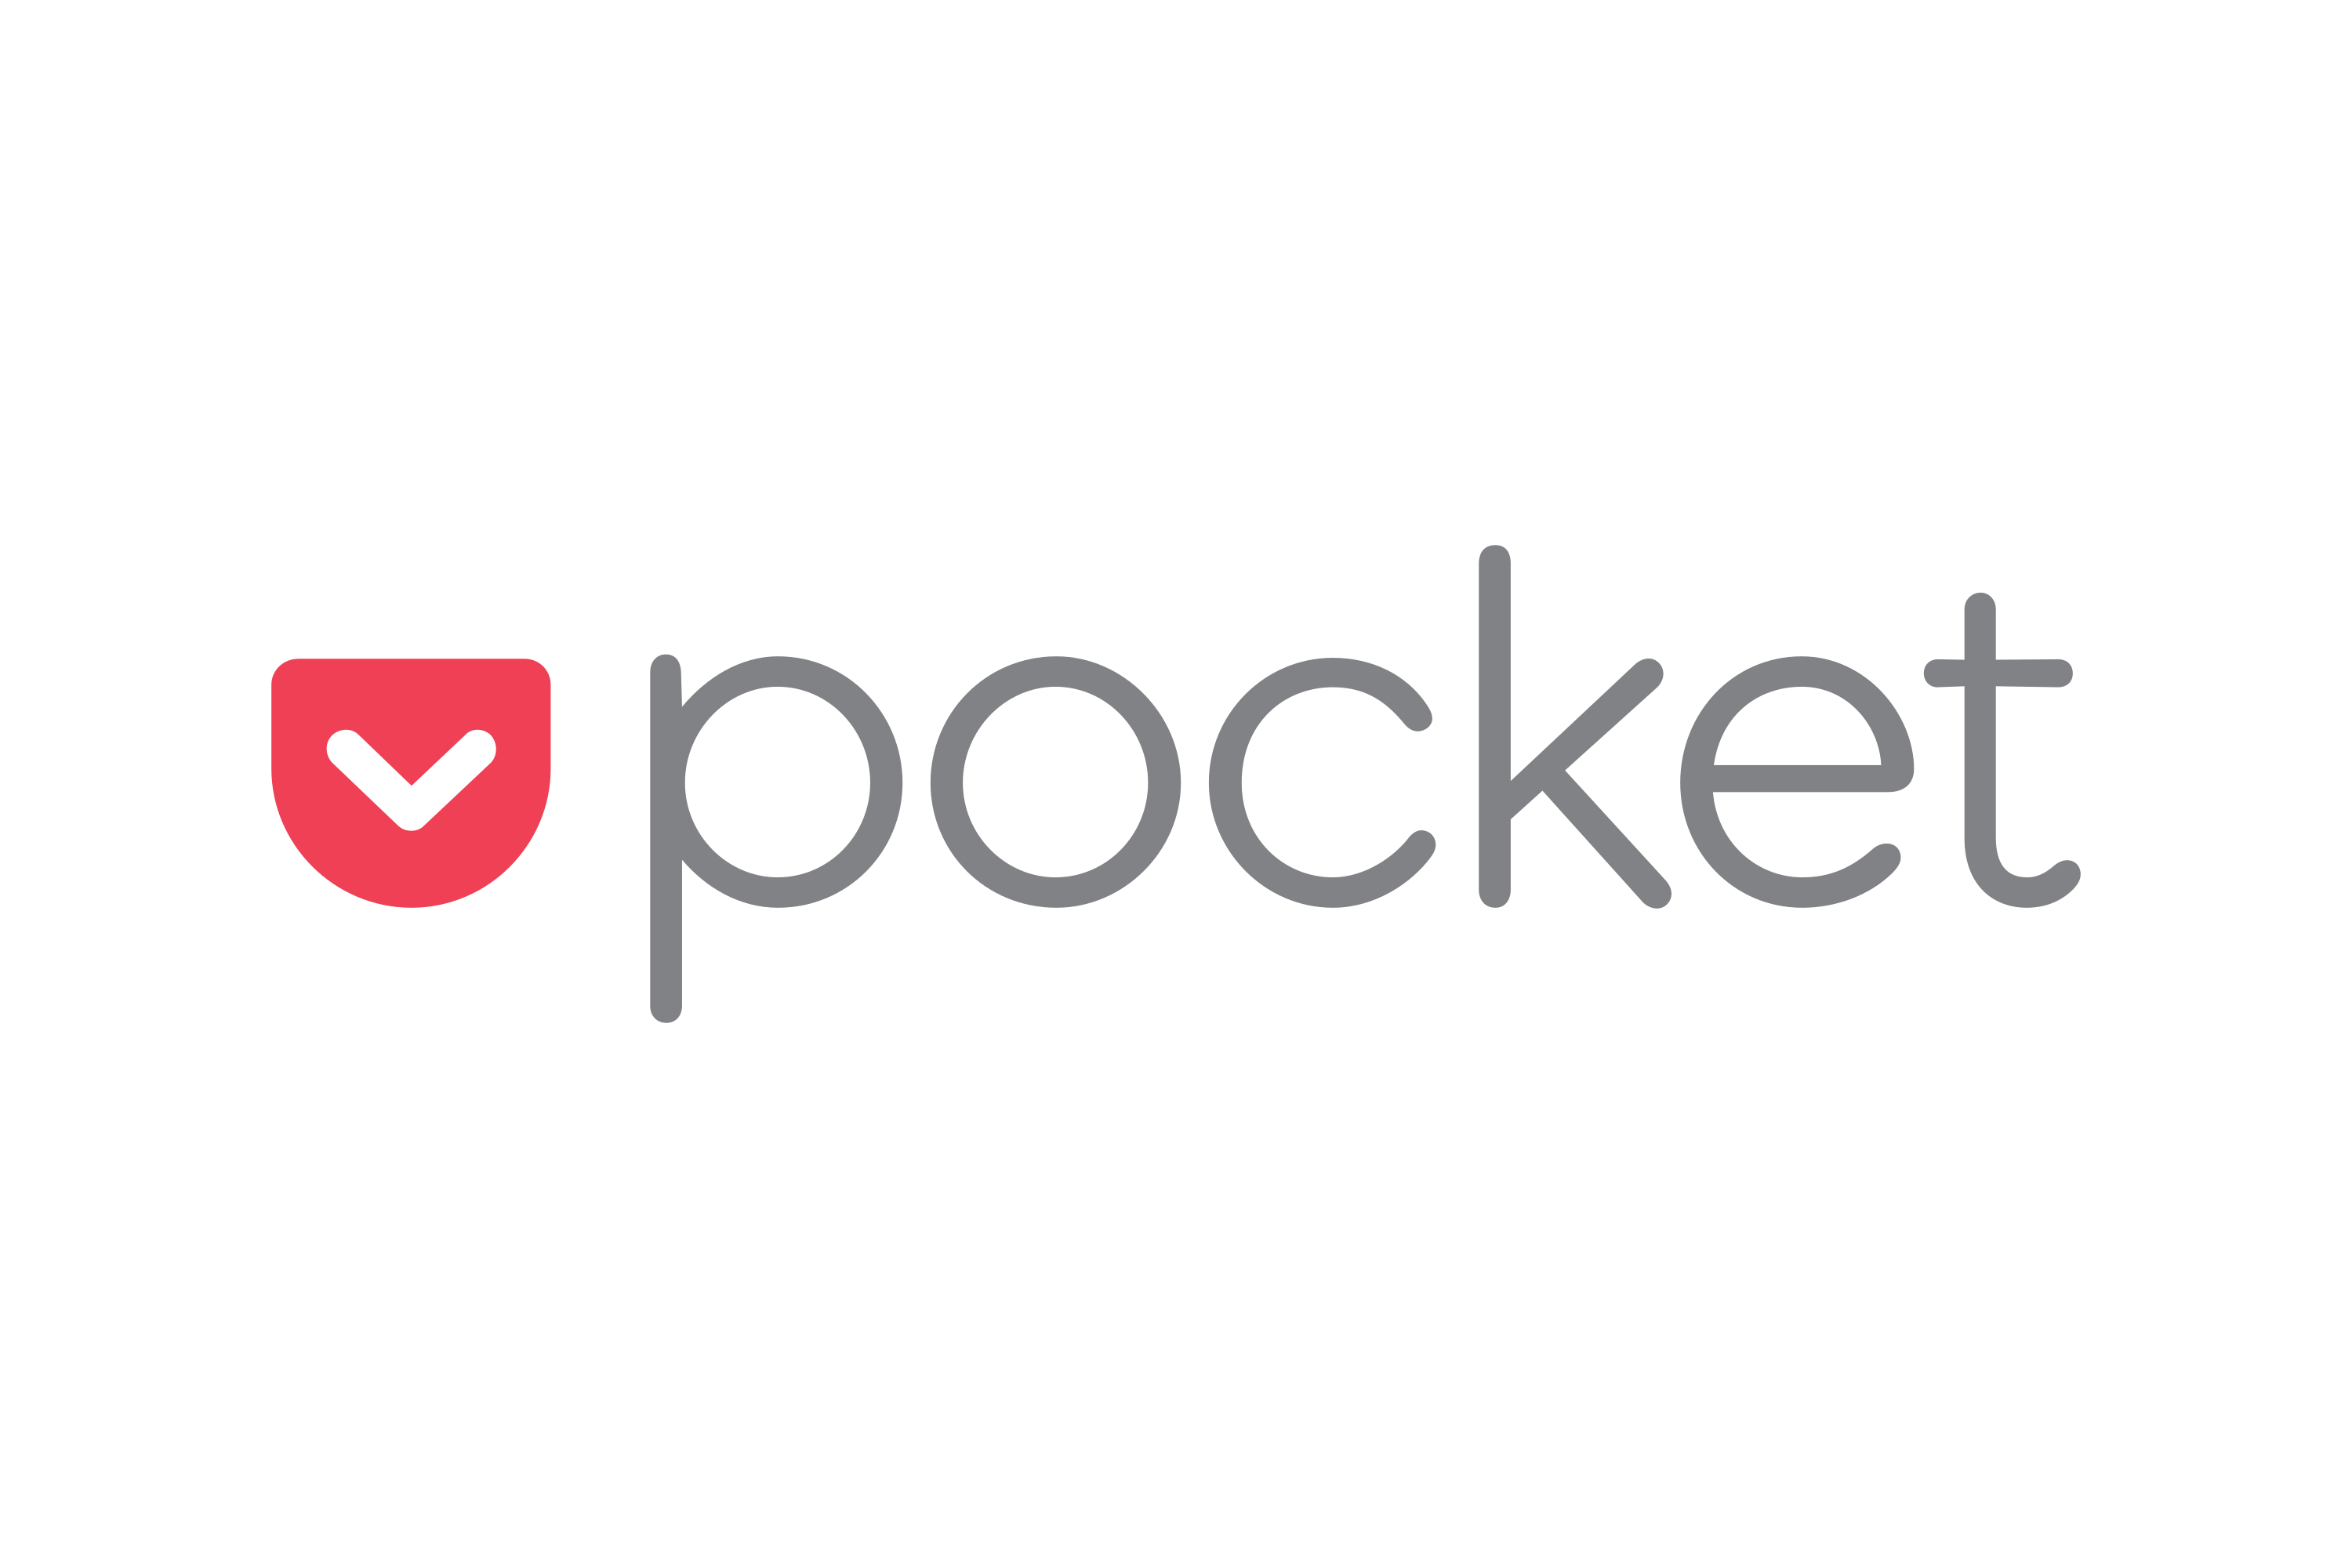 Mobile-pocket Vector Logo - (